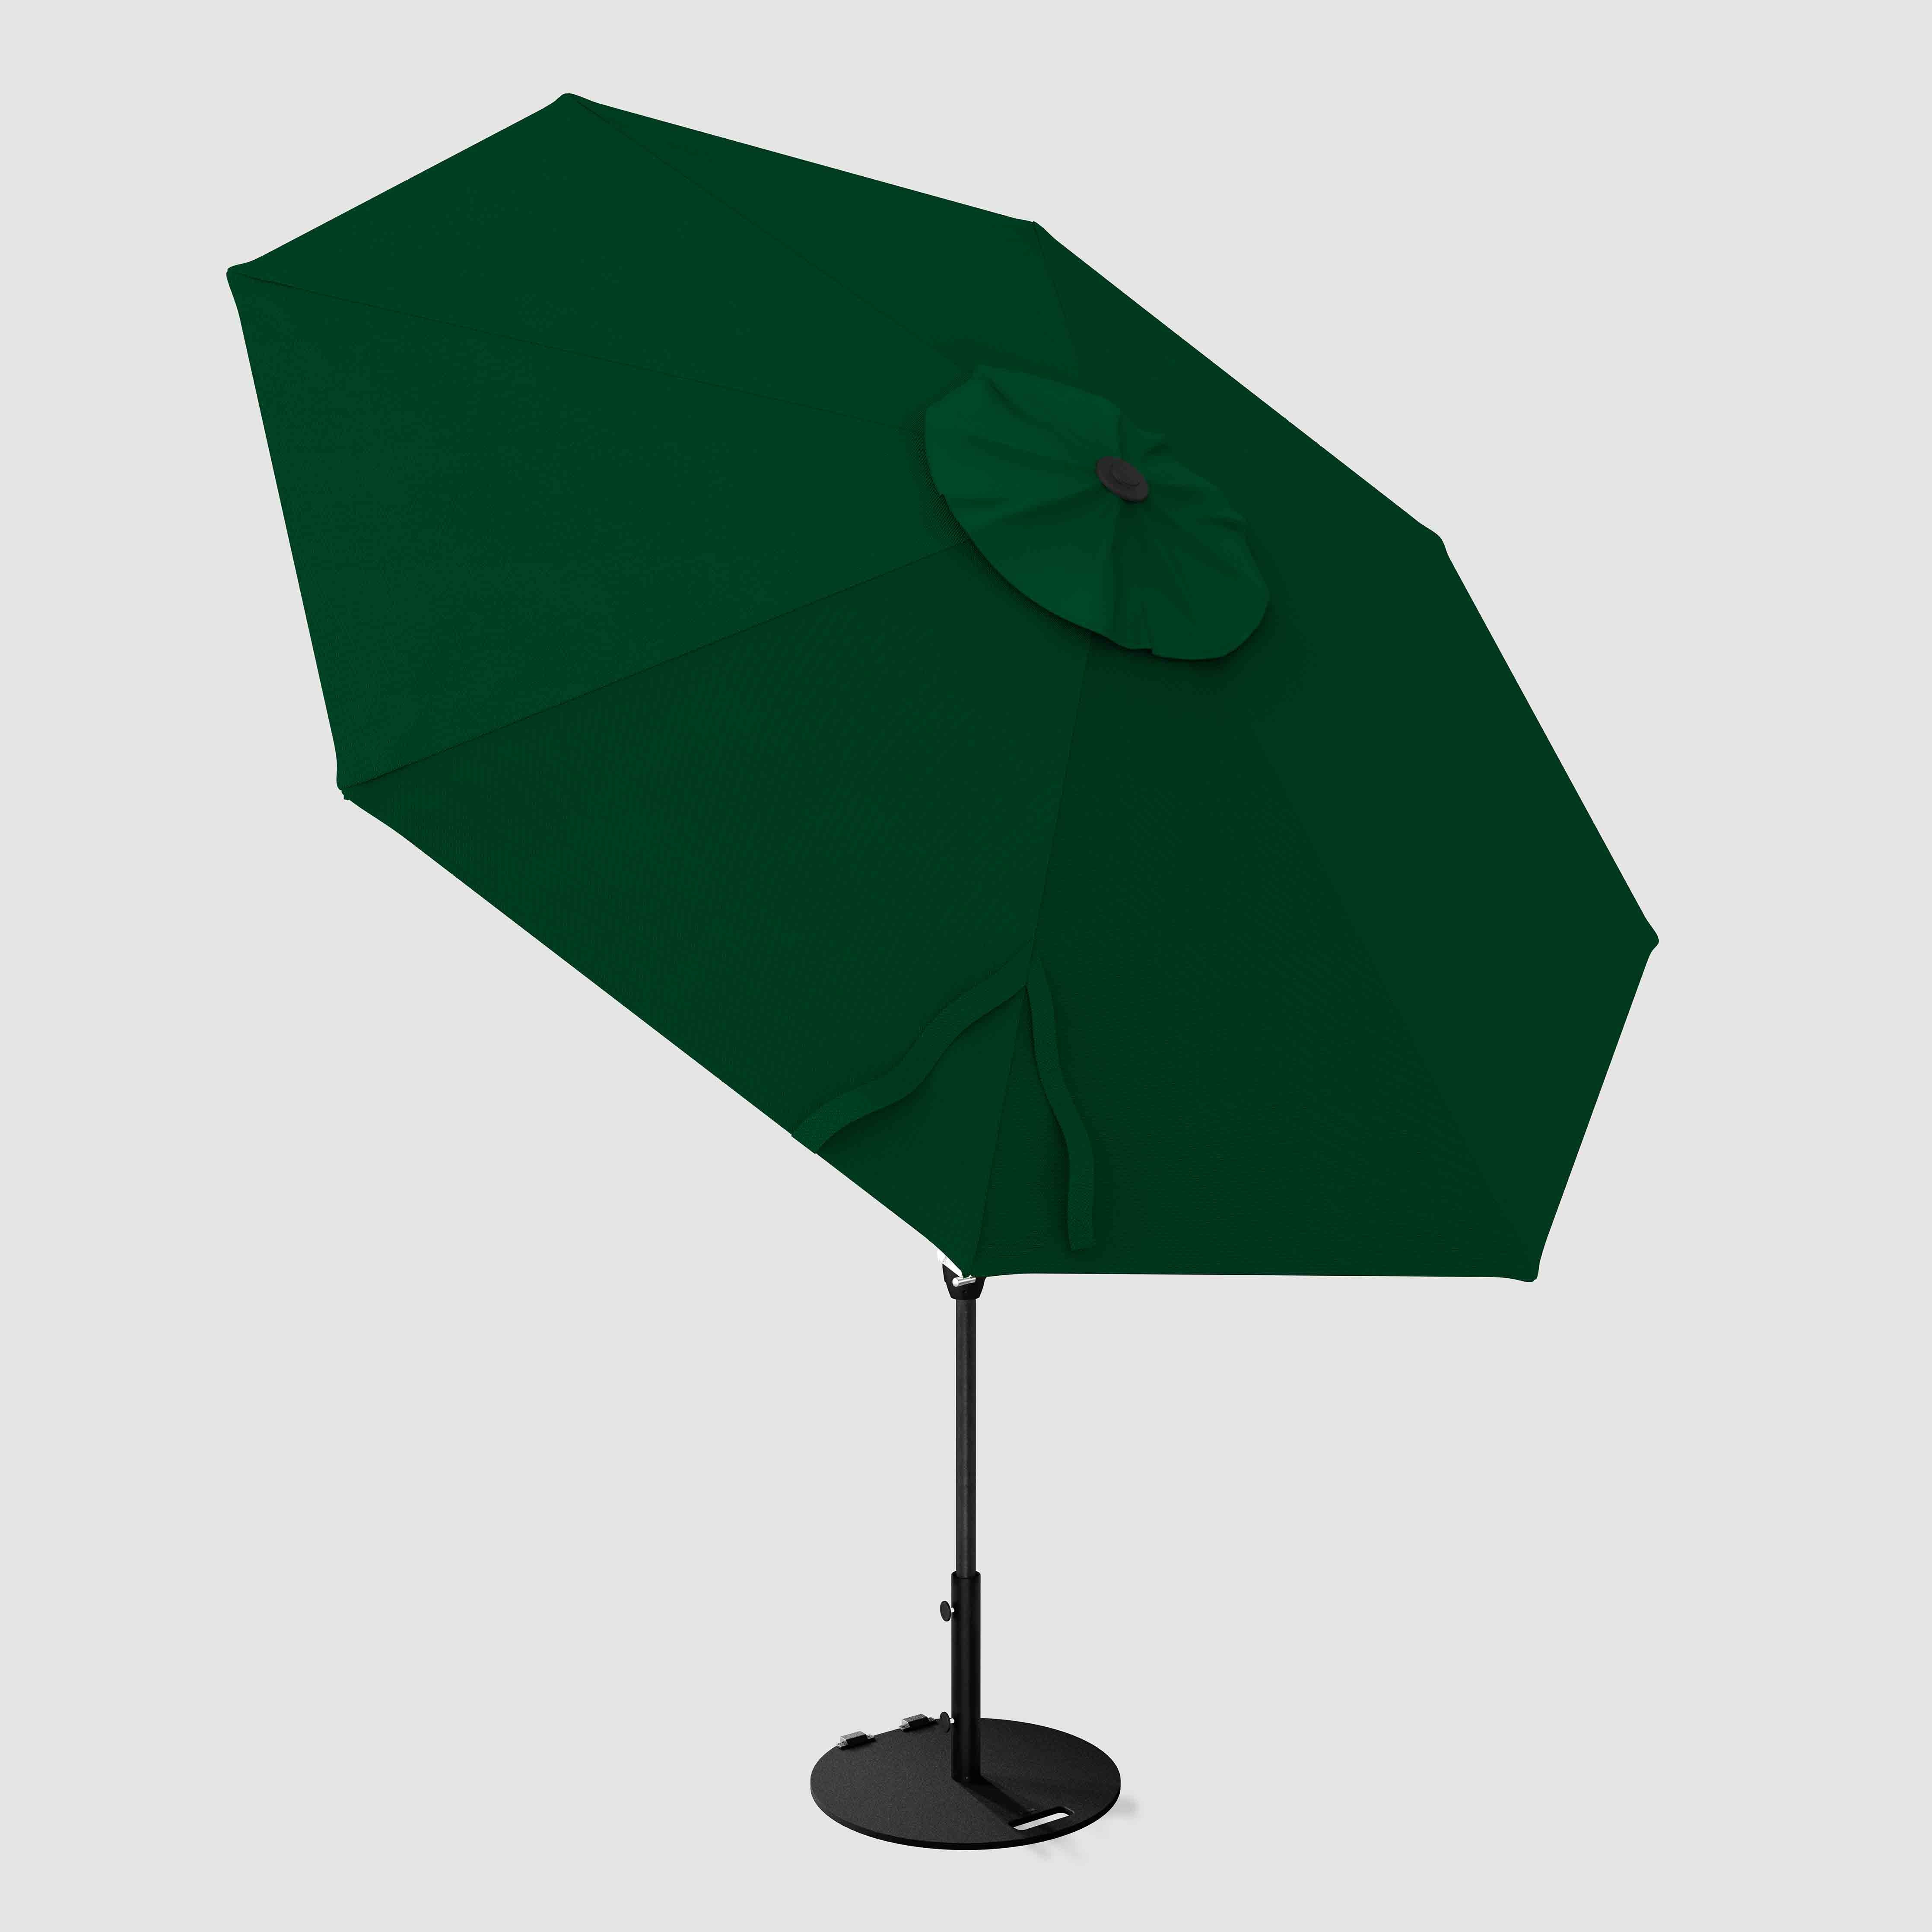 The Lean™ - Sunbrella Forest Green